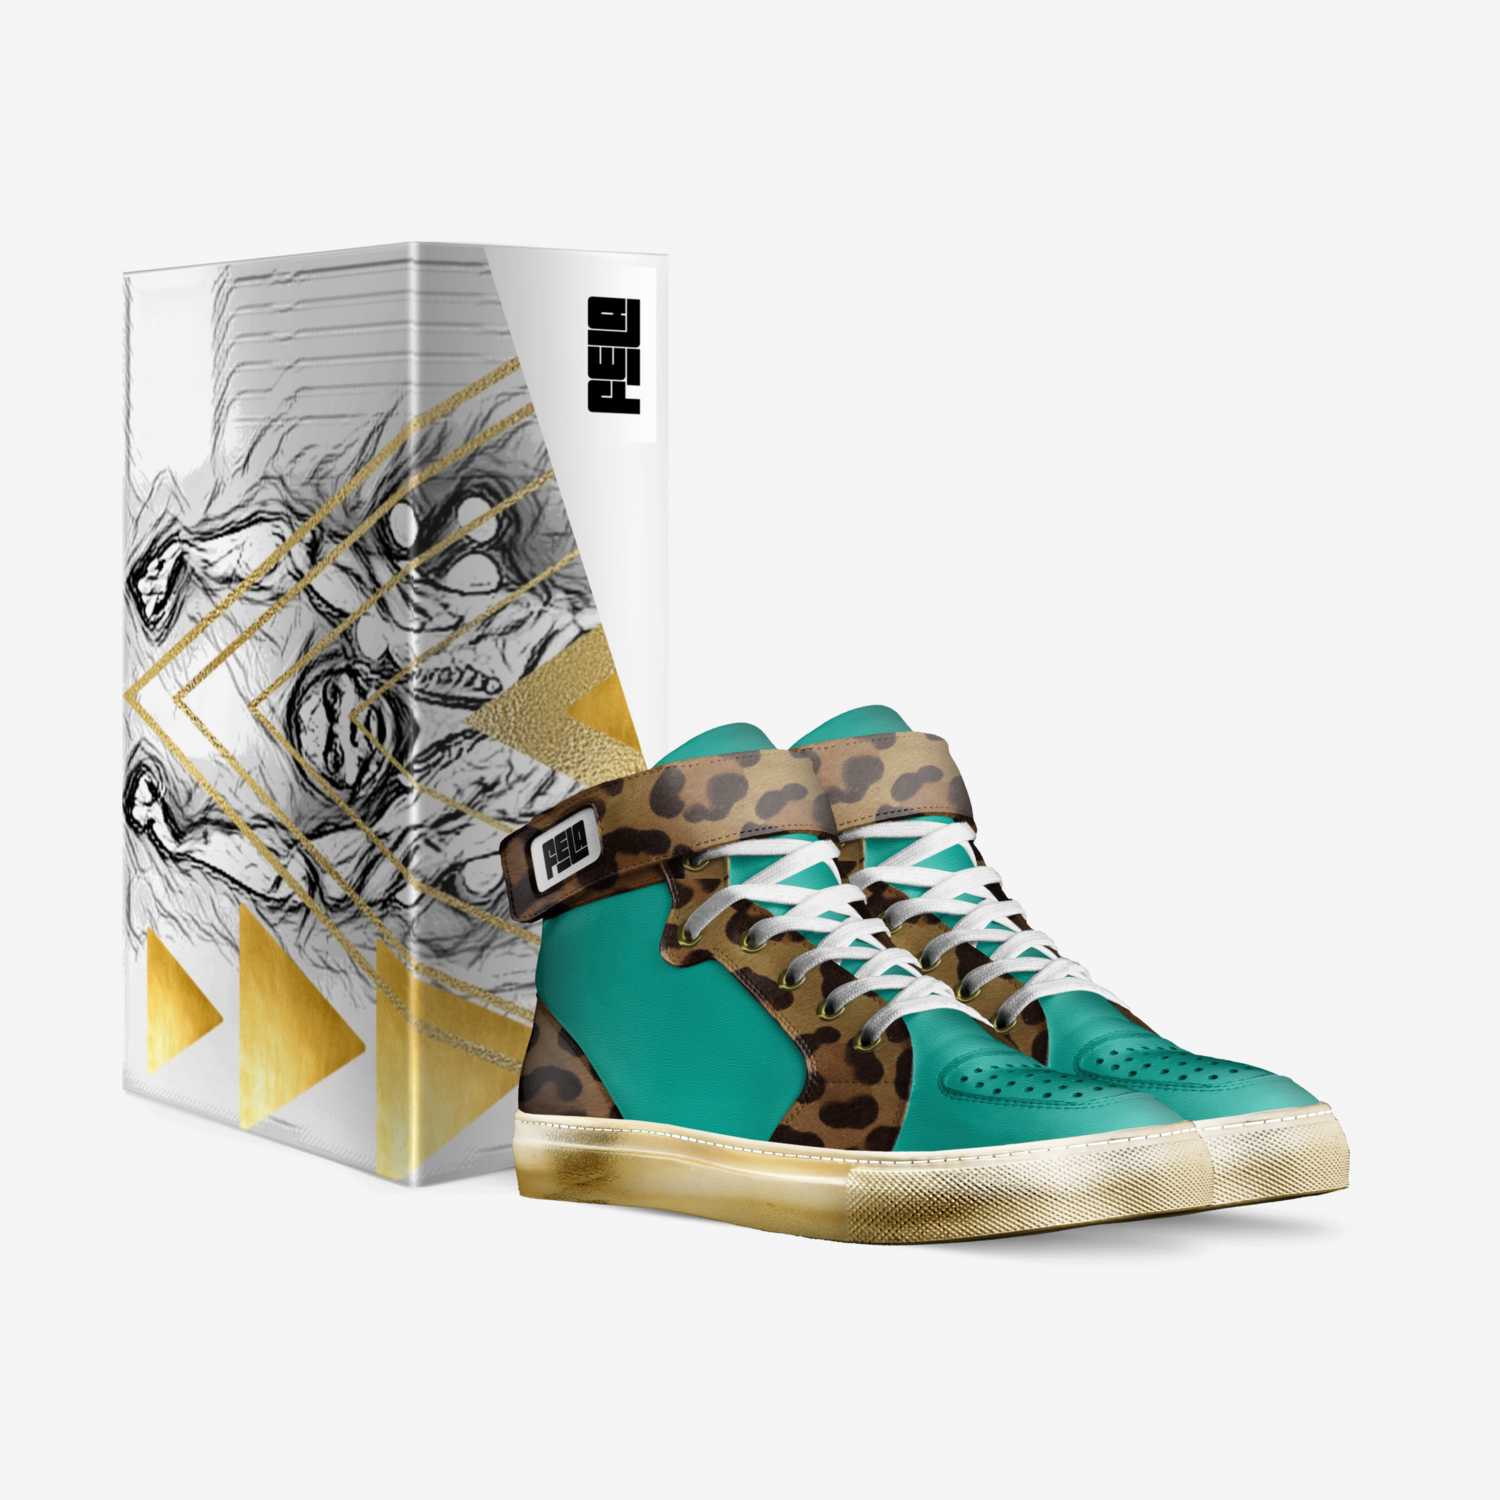 Fela  custom made in Italy shoes by Shakasis | Box view